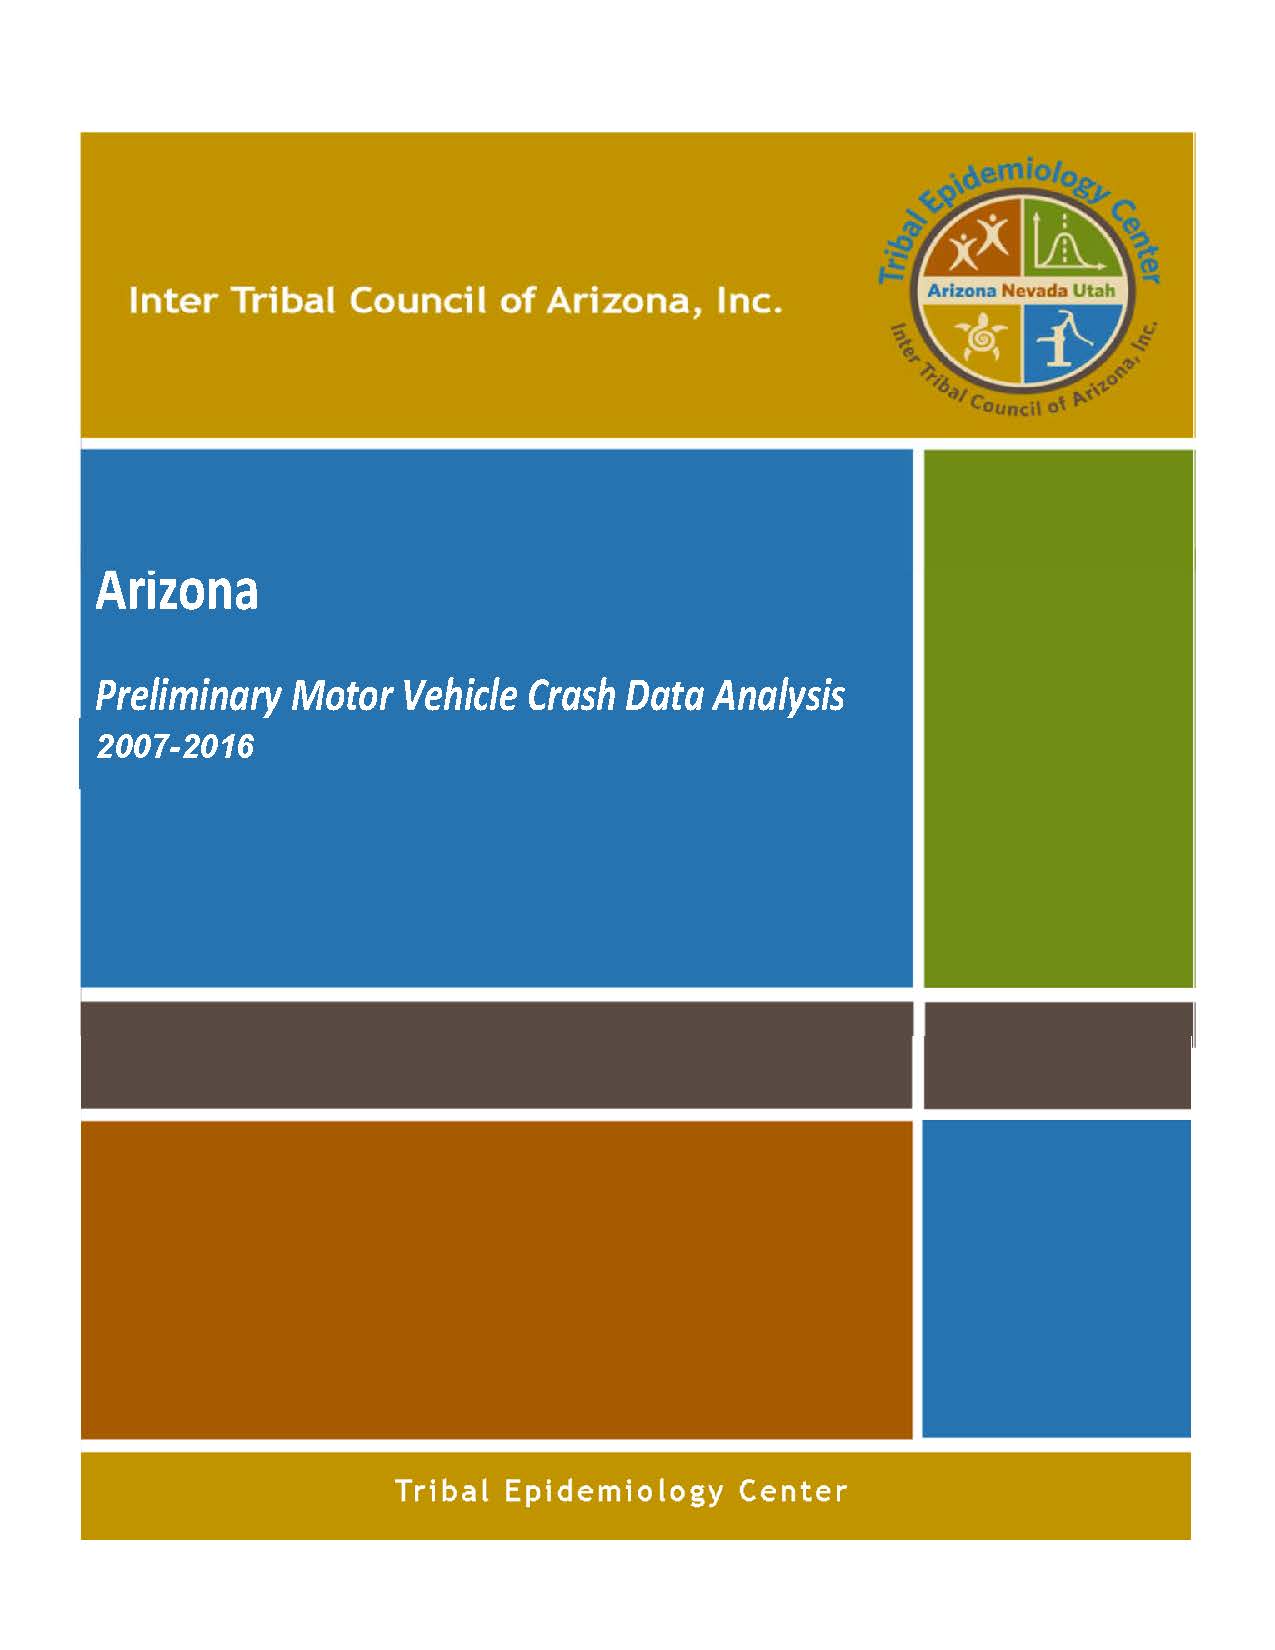 Arizona Preliminary Motor Vehicle Crash Data Analysis Report, 2007-2016